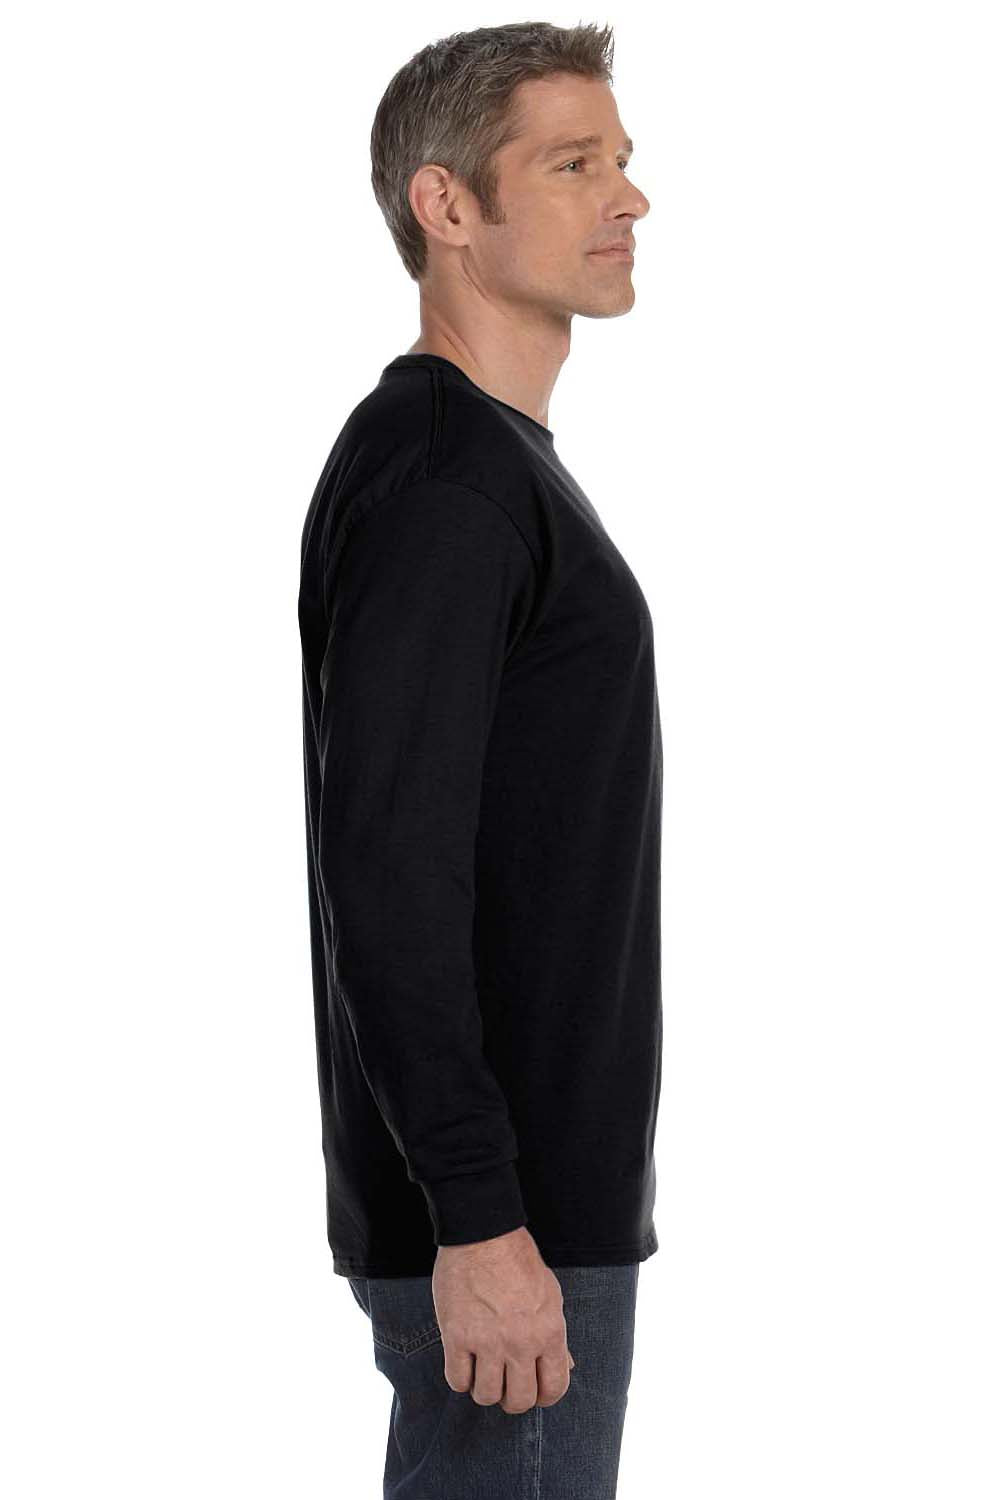 Hanes 5586 Mens ComfortSoft Long Sleeve Crewneck T-Shirt Black Side